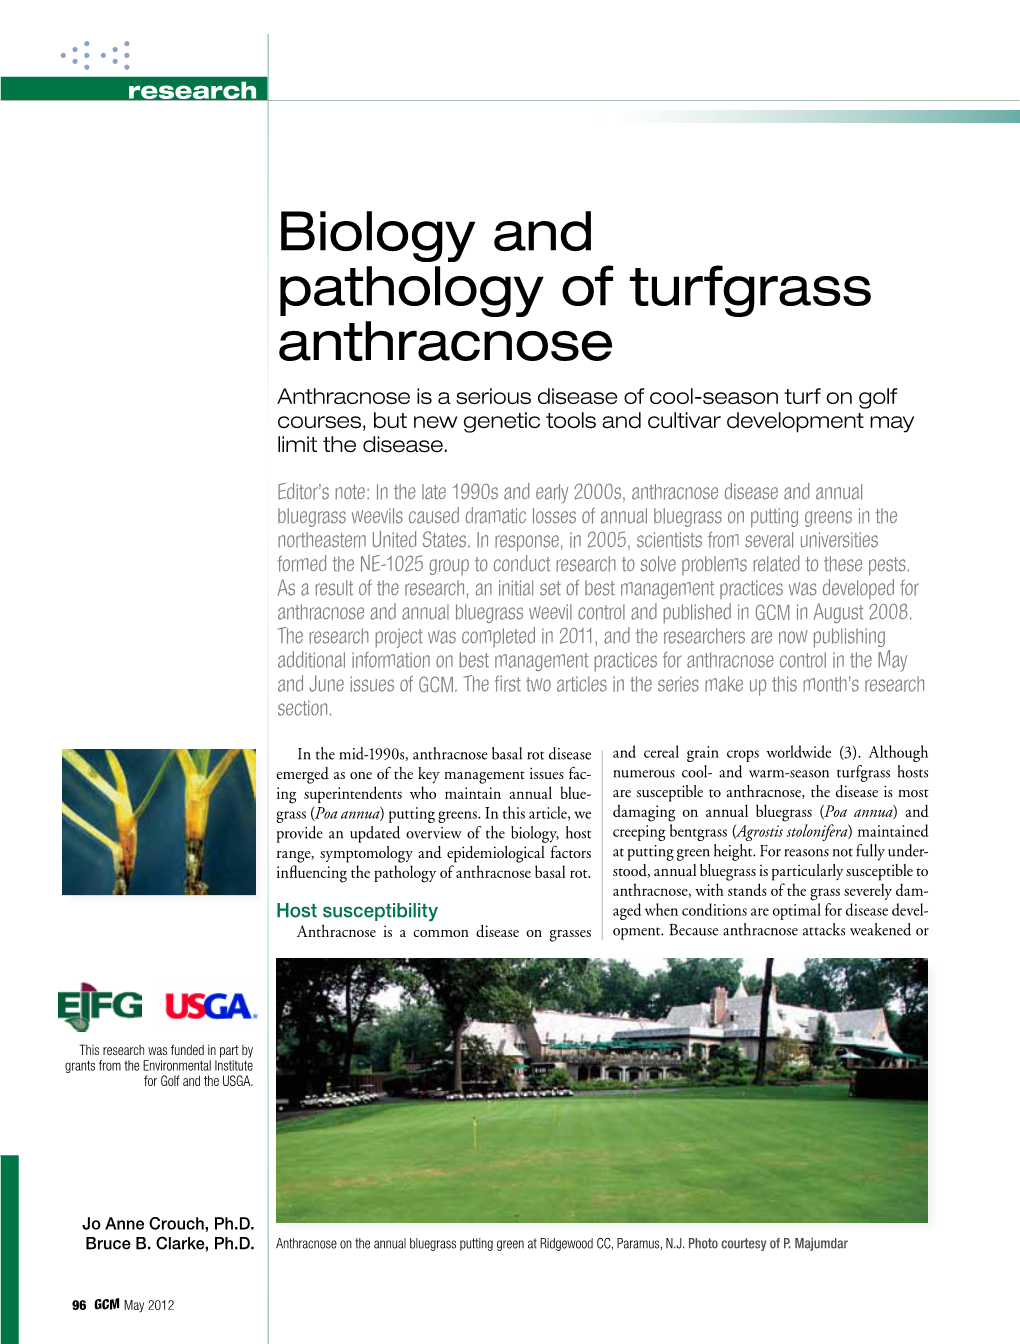 Biology and Pathology of Turfgrass Anthracnose